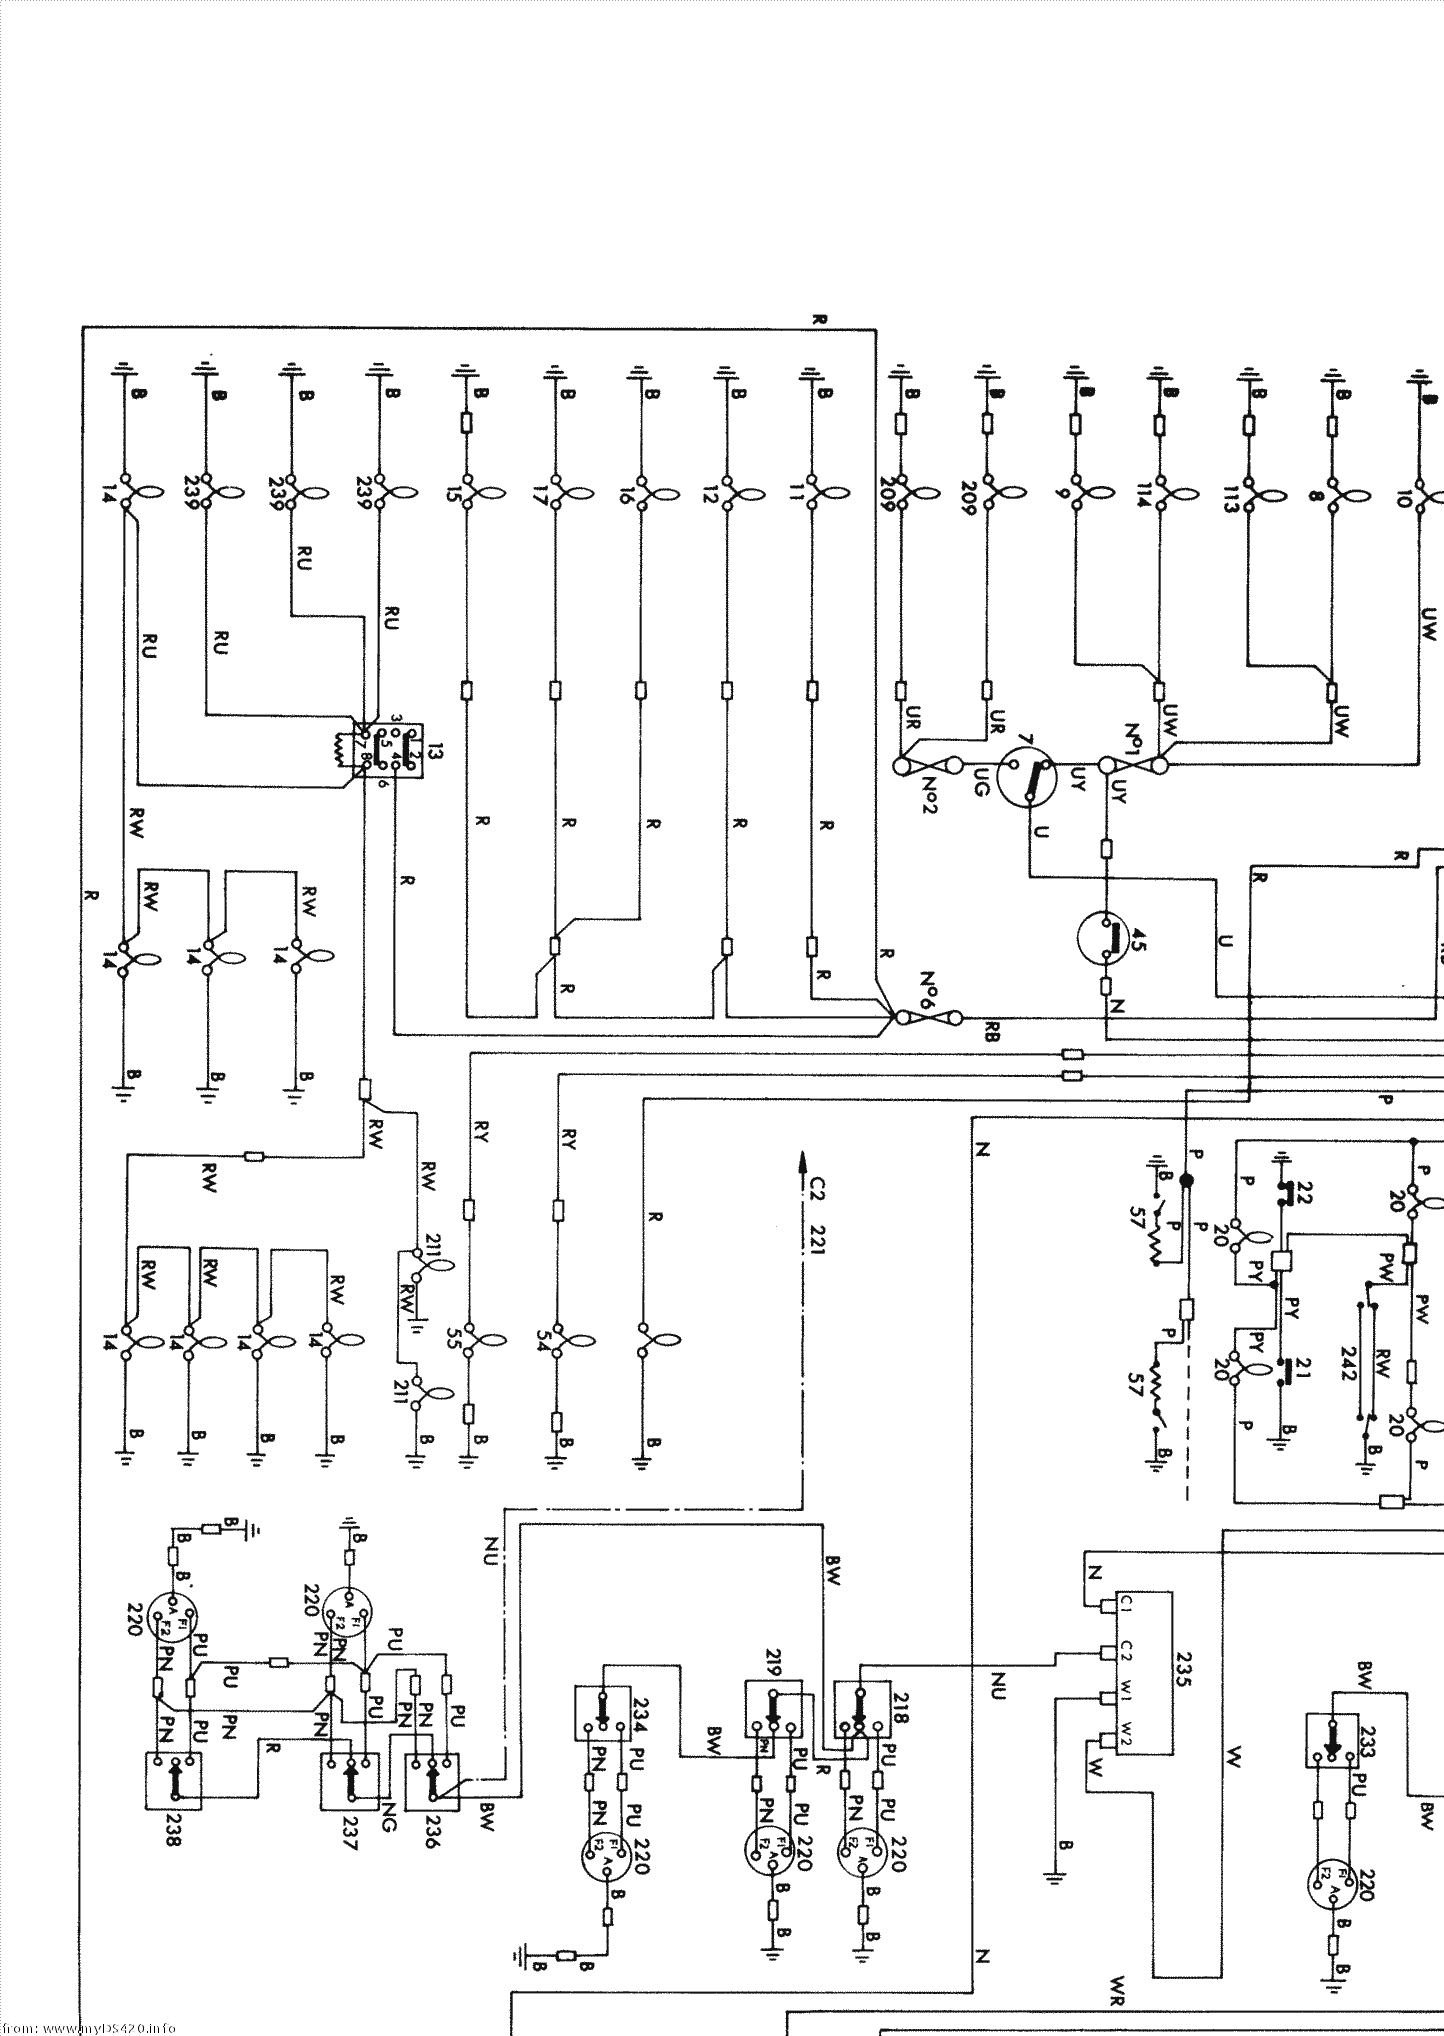 wiring diagram medium res. A4 SW (1970)